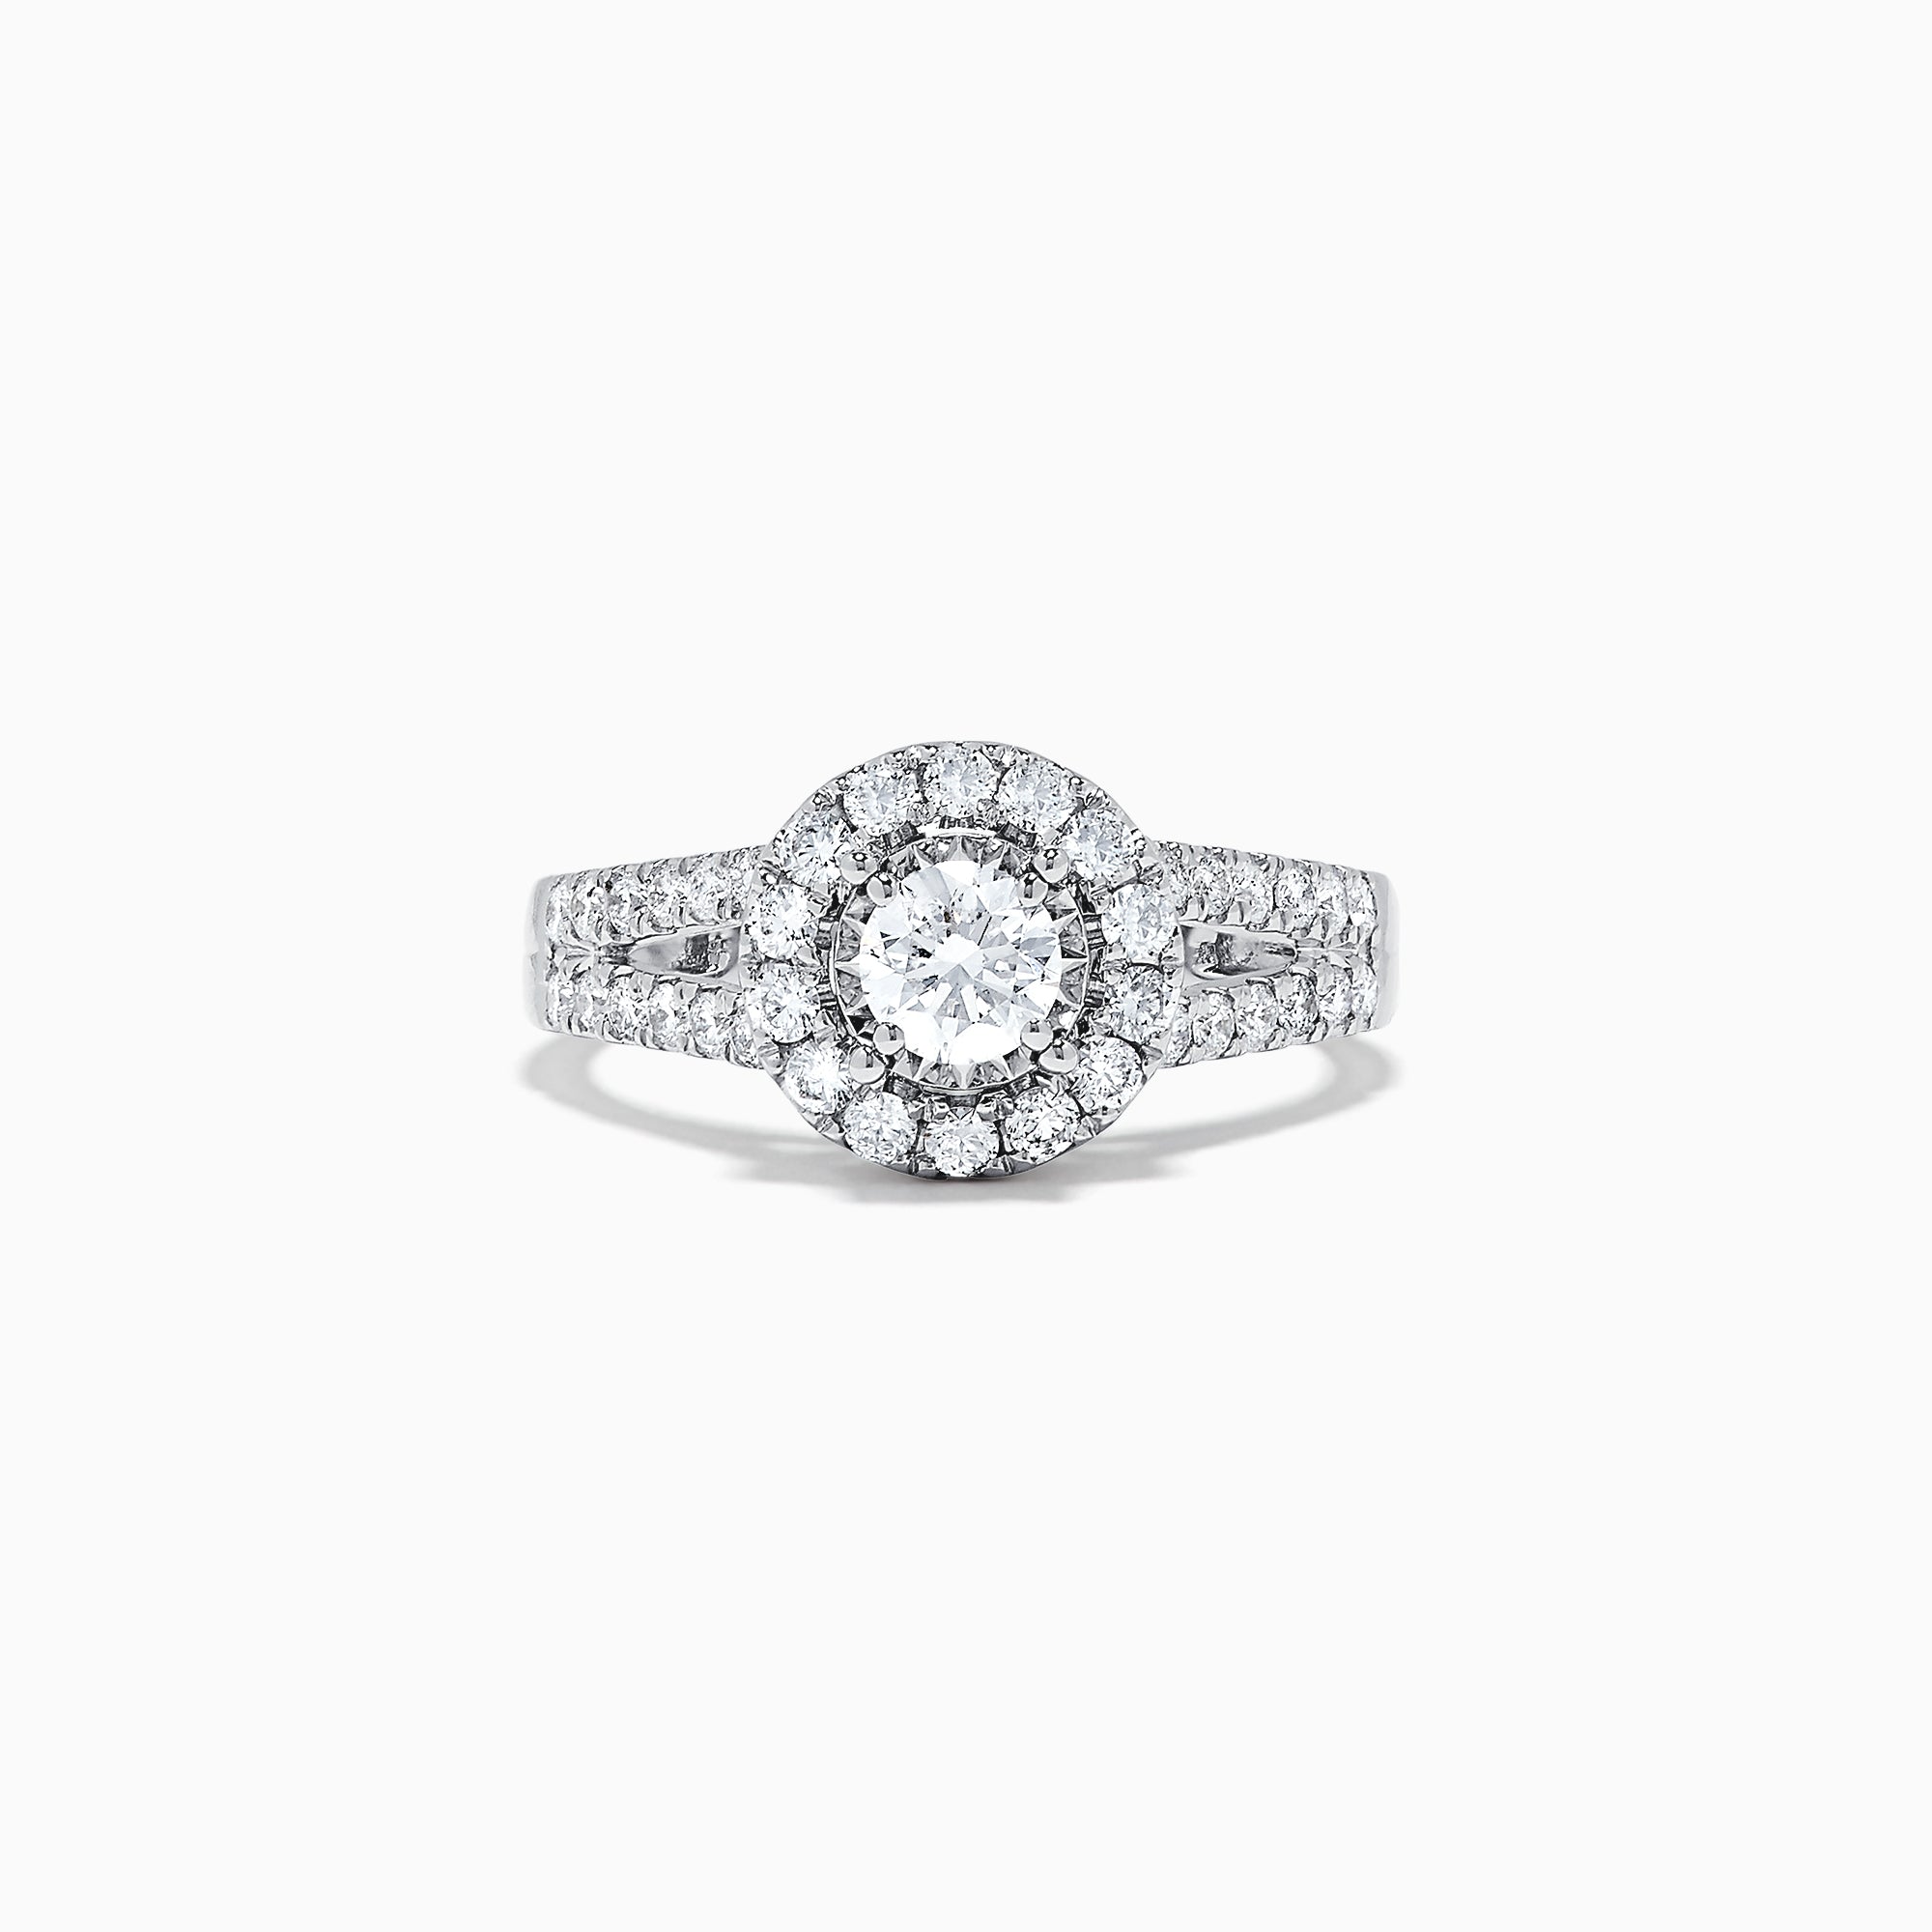 Effy Bridal 14K White Gold Diamond Ring, 1.02 TCW